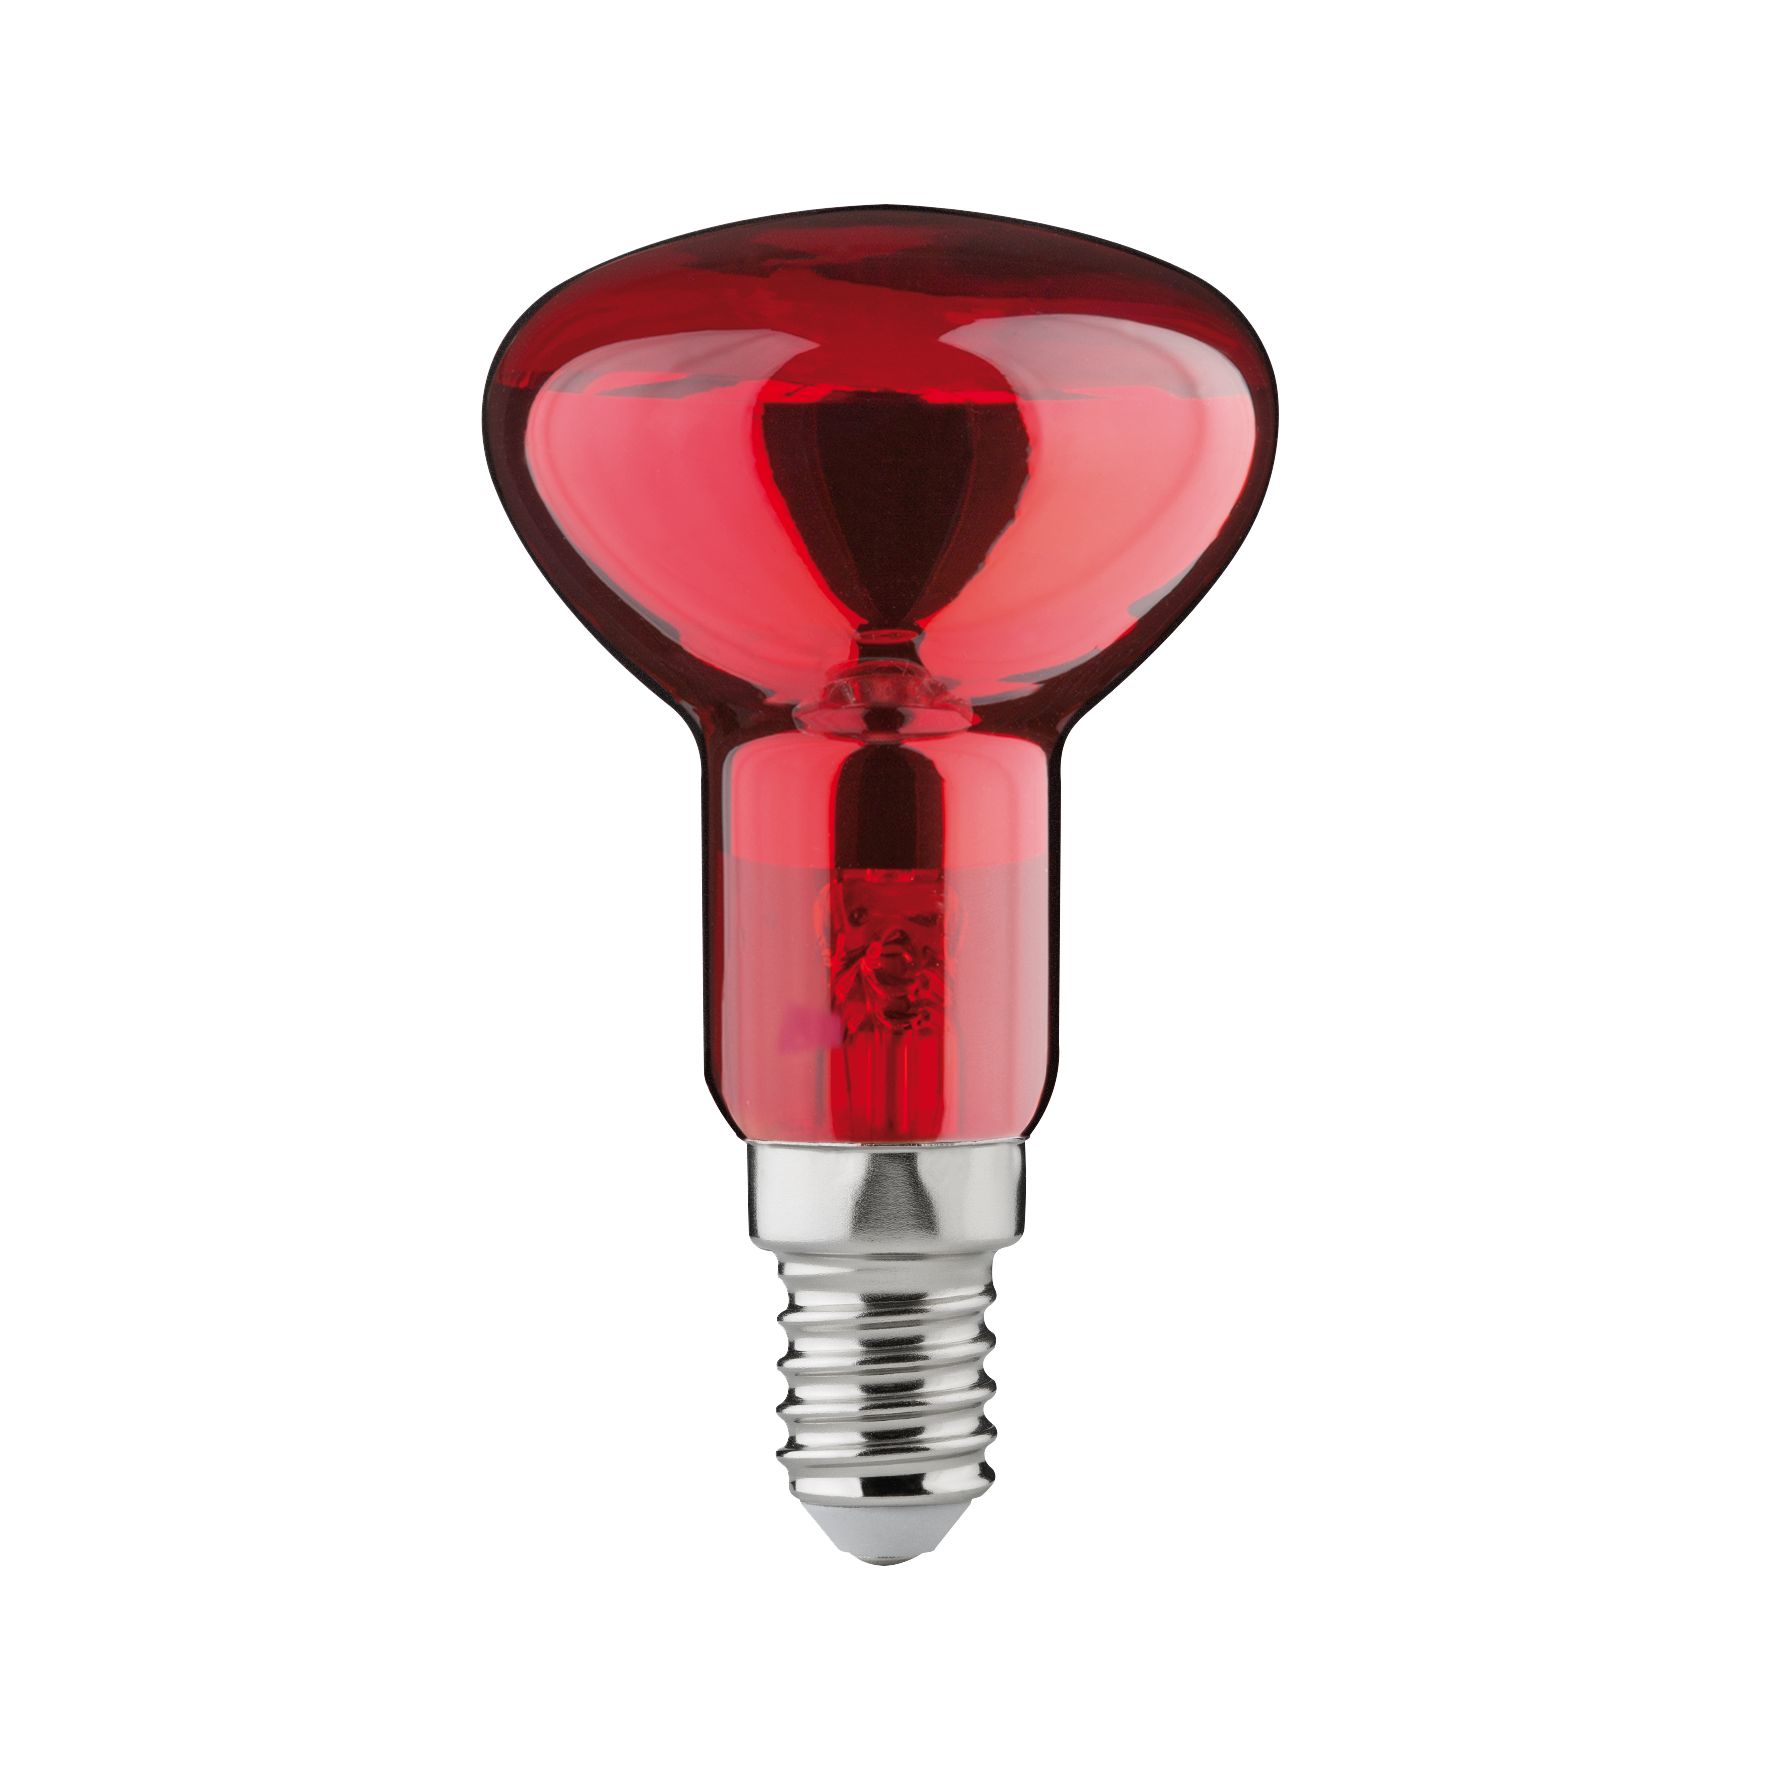 Лампа накаливания мощностью 50 вт. Лампа накаливания икзк r127 250w e27 2160lm красный КЭЛЗ. Лампа икзк 230 -150. Лампа икзк 250вт е27. Лампа инфракрасная 250w икзк.